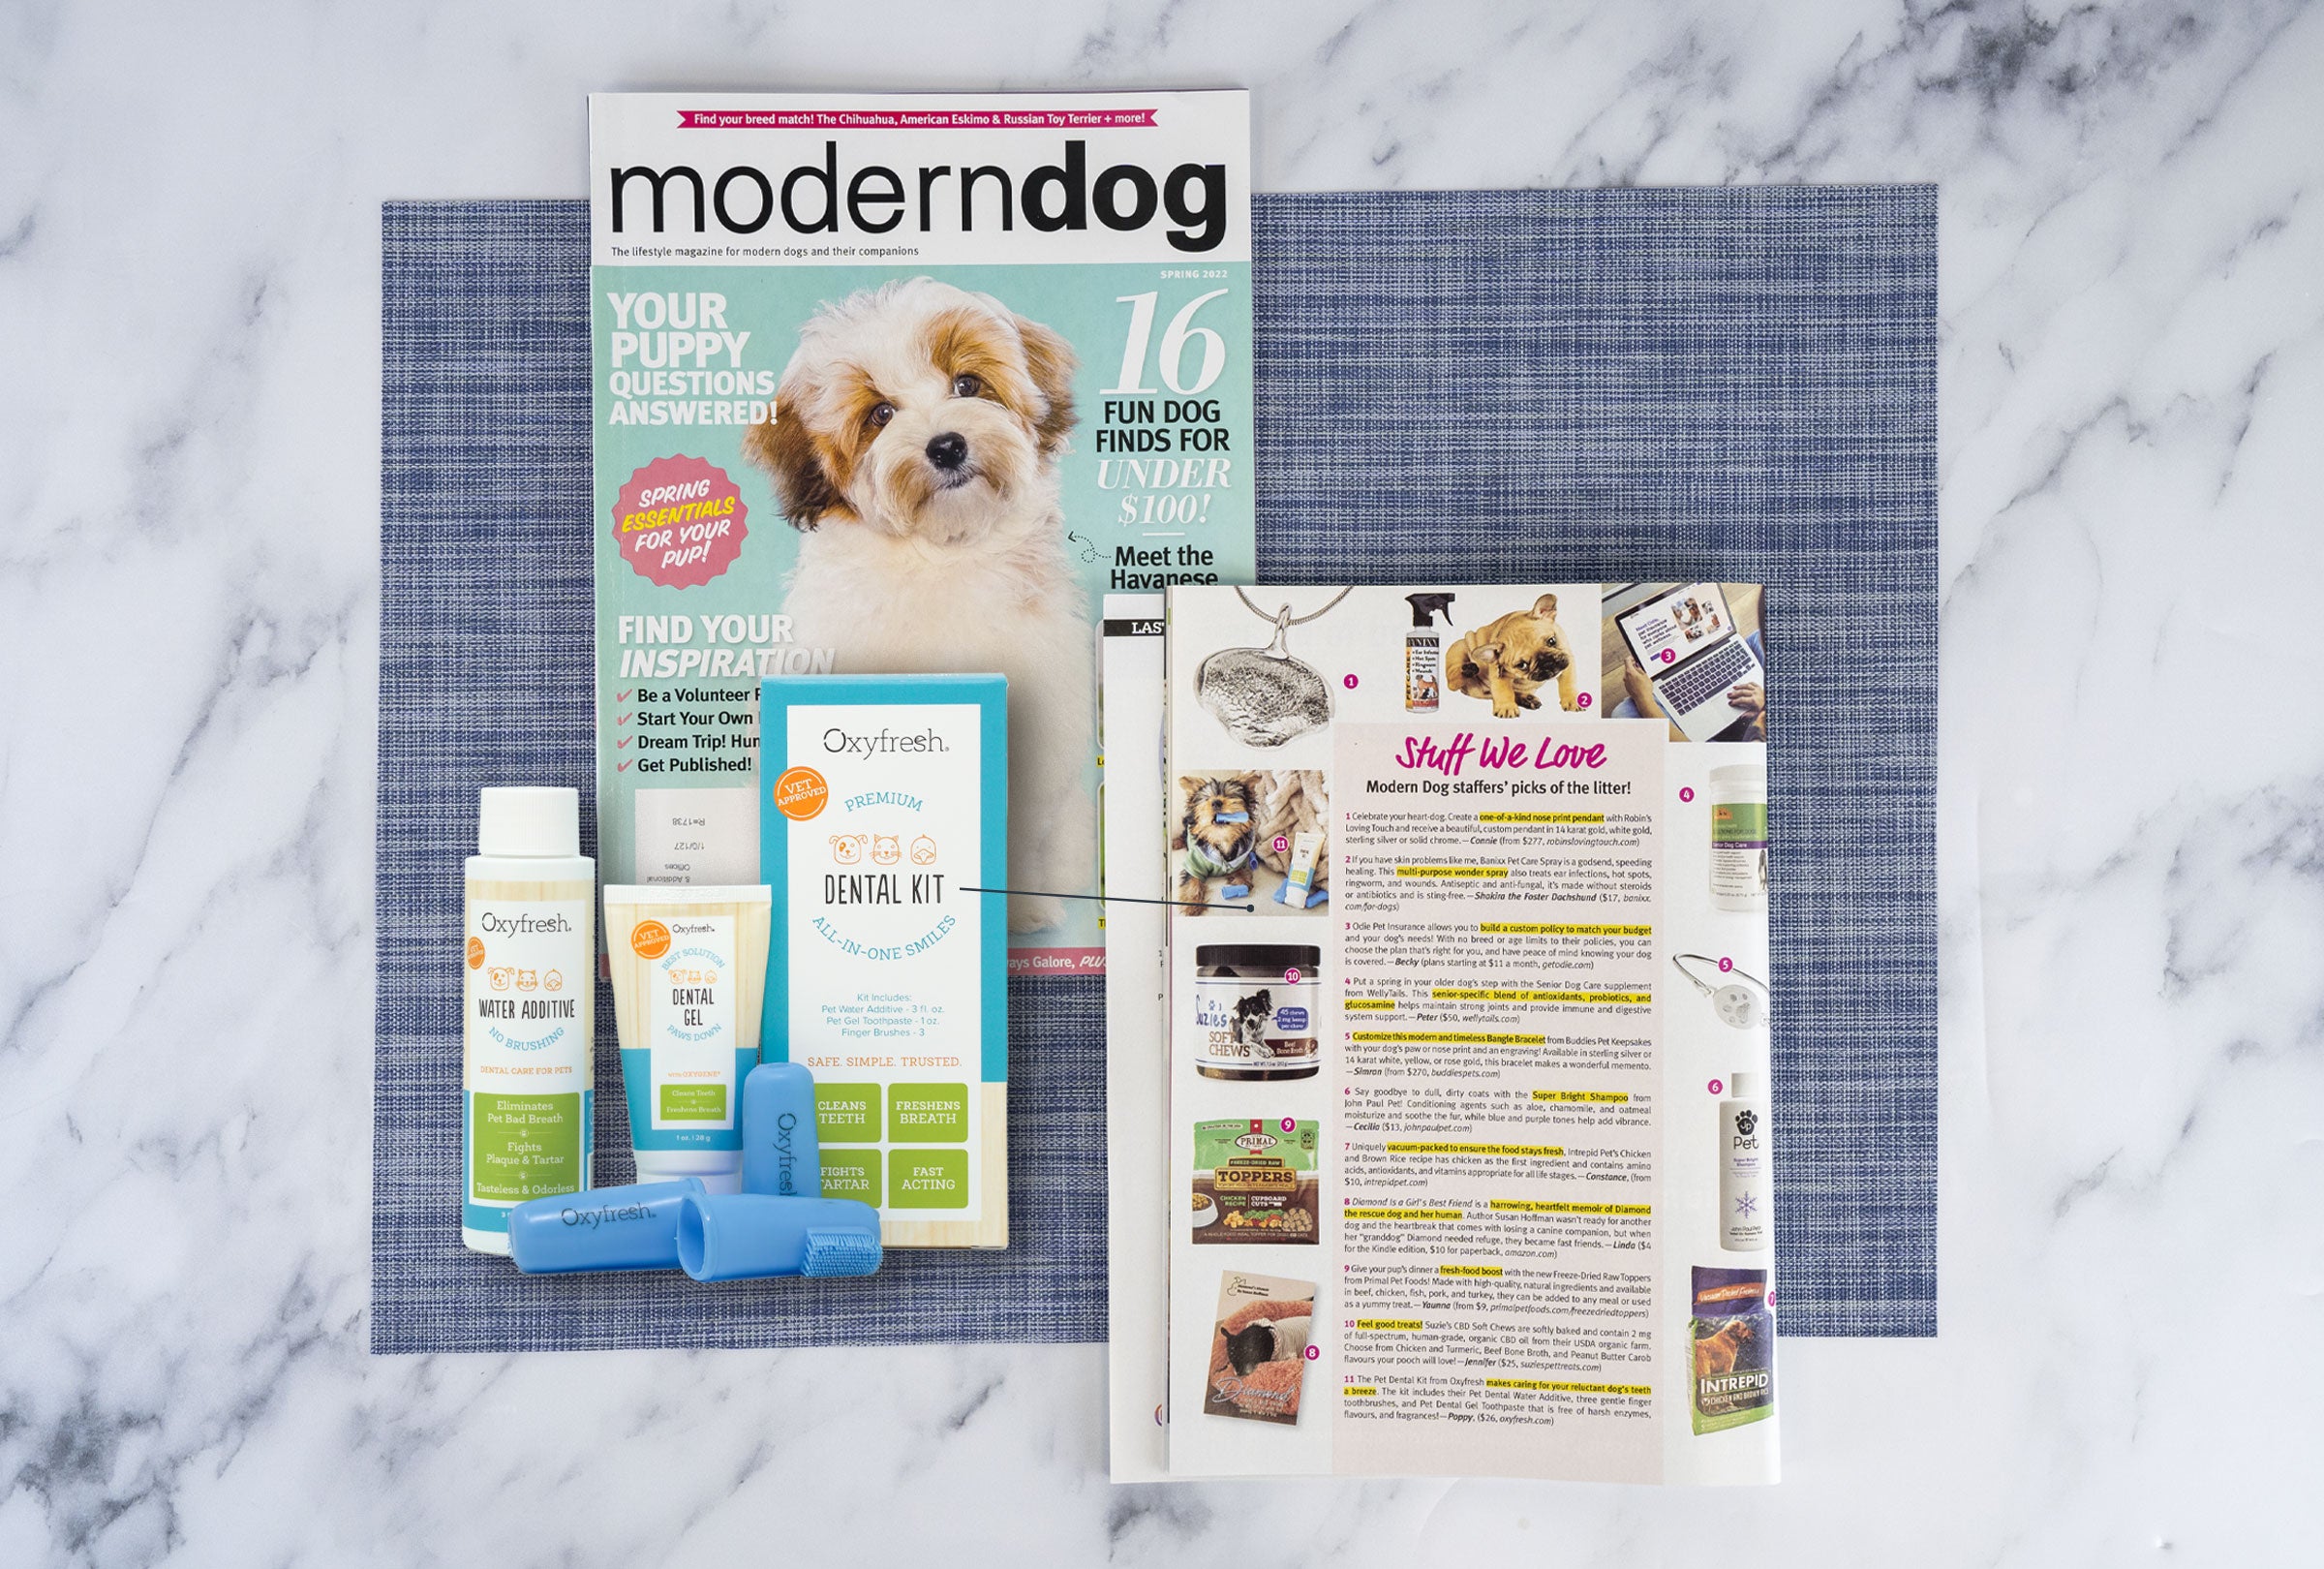 oxyfresh pet dental kit next to article in Modern Dog magazine